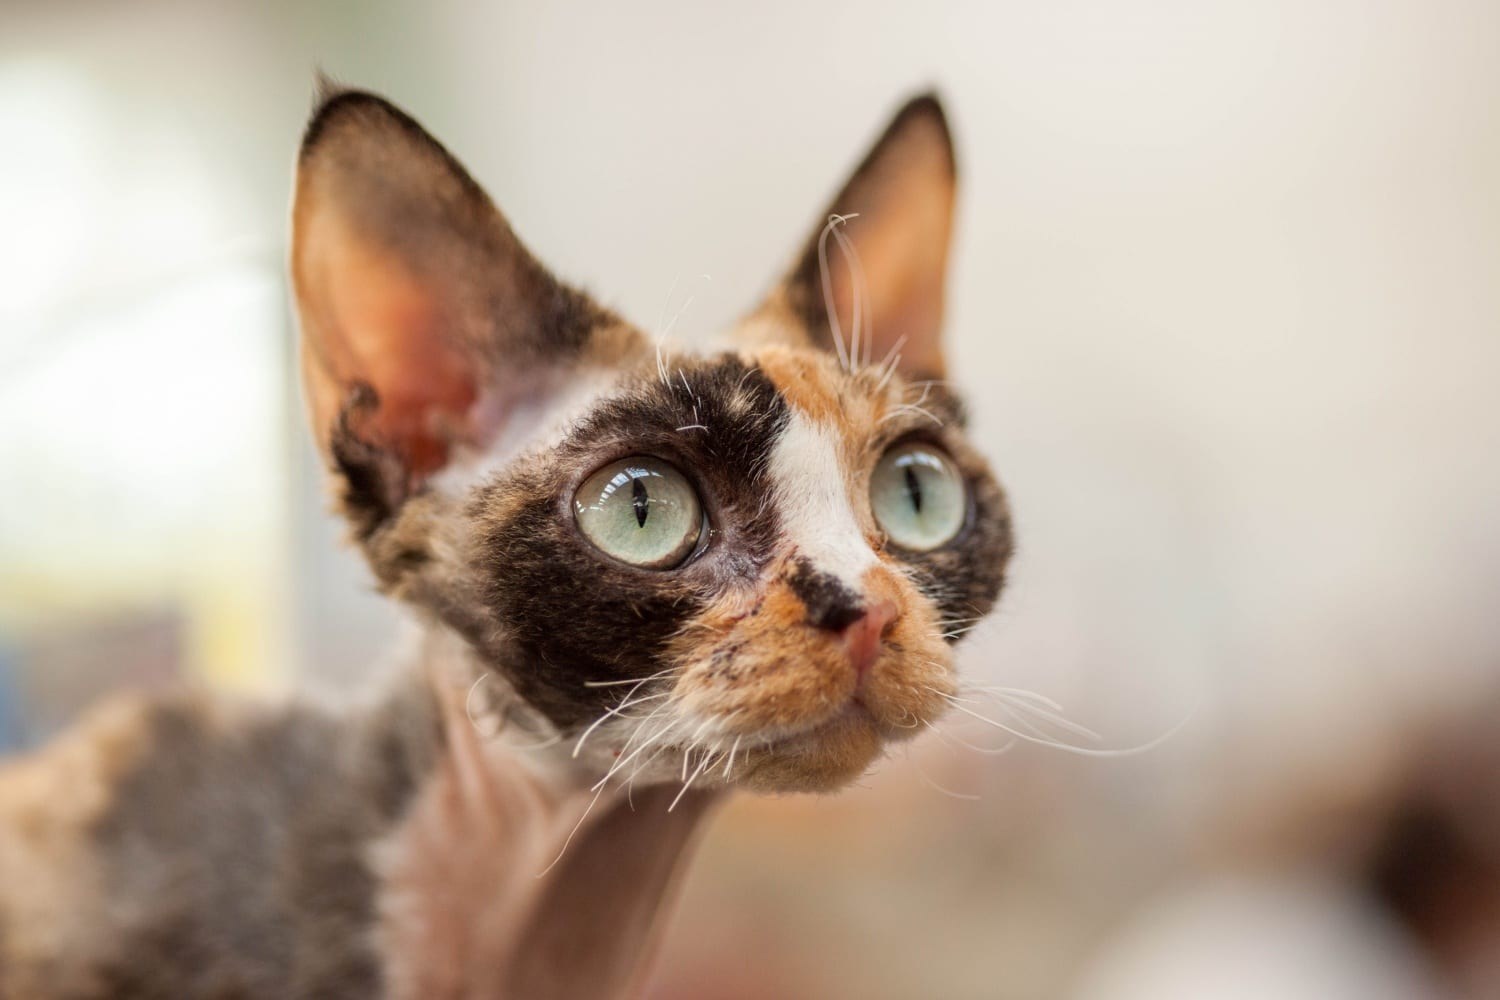 Kitten lil pixie 100% FREE: